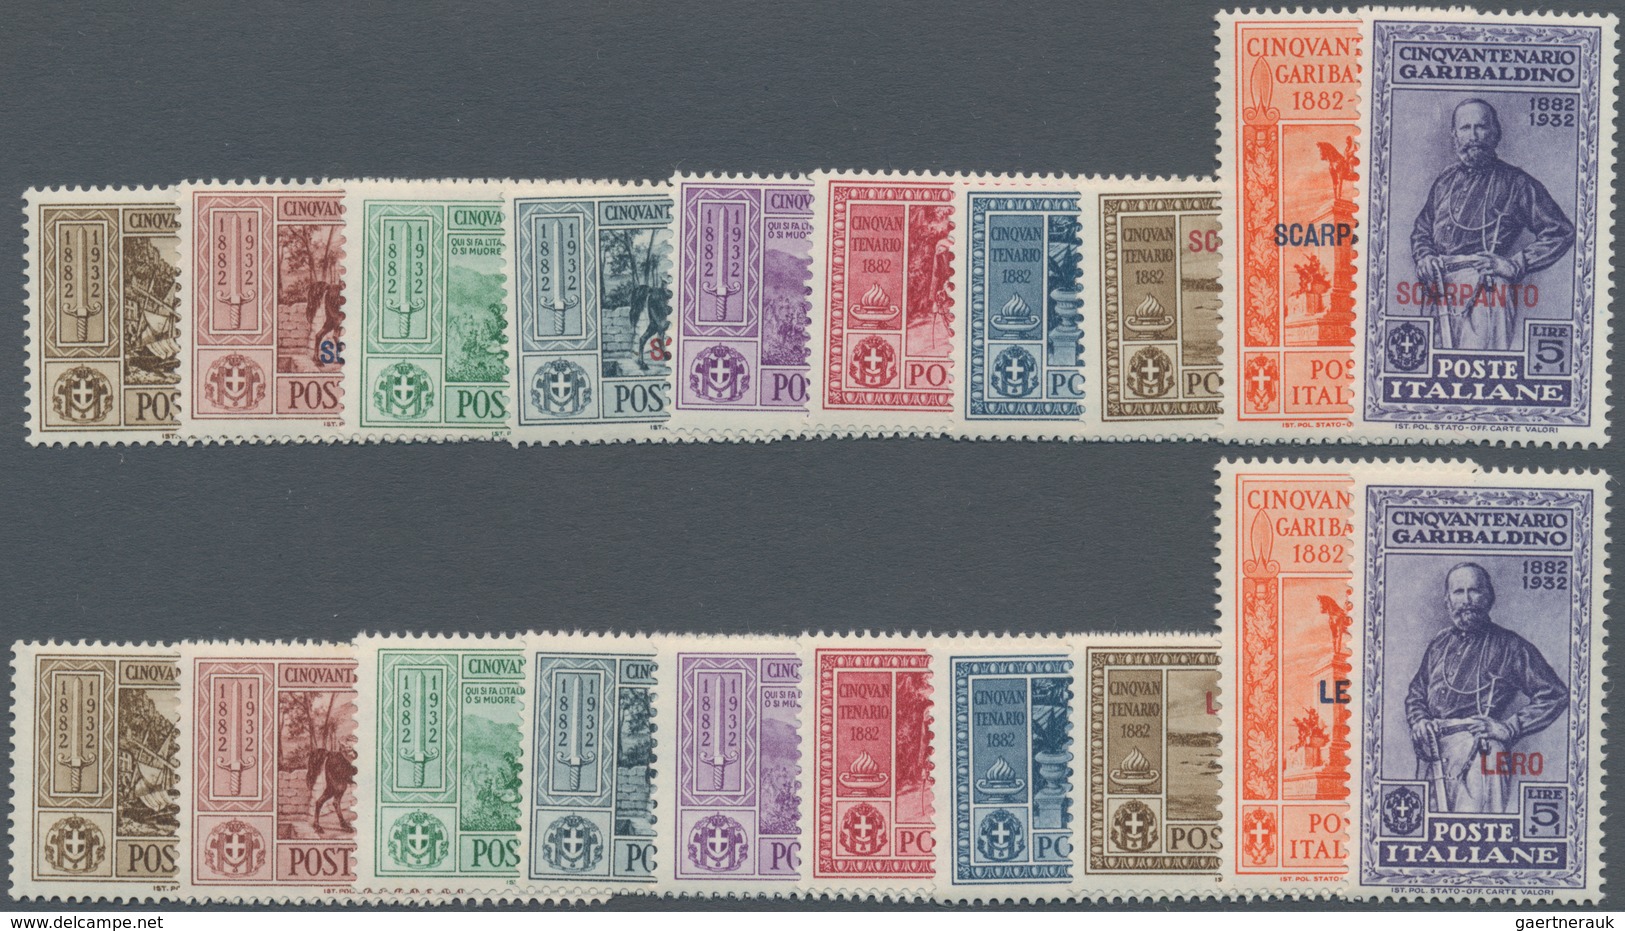 Ägäische Inseln: 1932, Garibaldi Four Complete Sets With Diff. Opts. Incl. LERO, NISIRO, SCARPANTO A - Ägäis